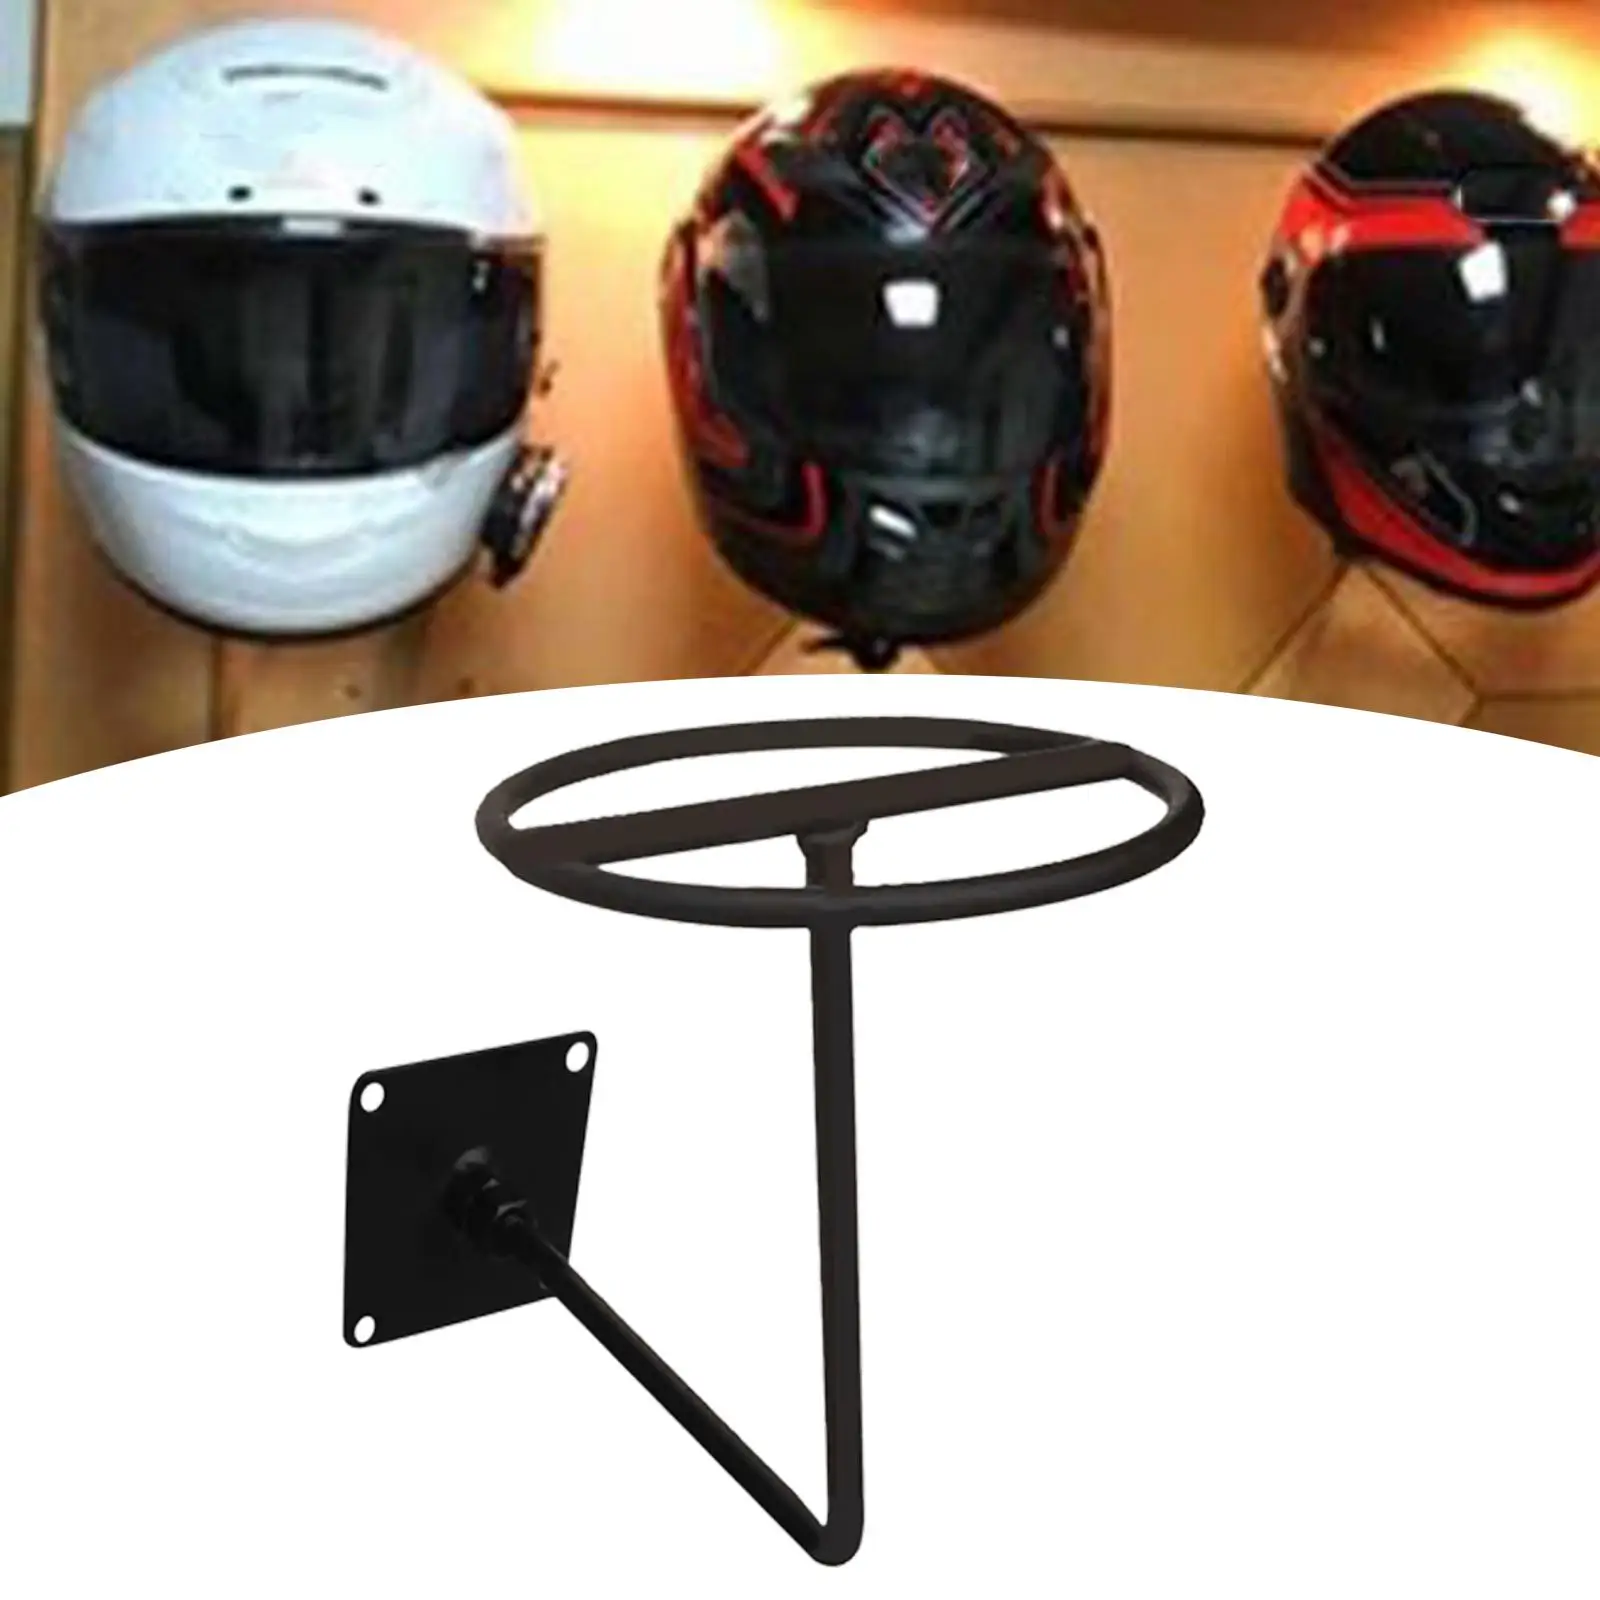 Motorcycle Helmet Holder Storage Multifunctional Wall Mounted Metal Hook Stand Rack Fits for Coats Caps Jacket Hats Garage